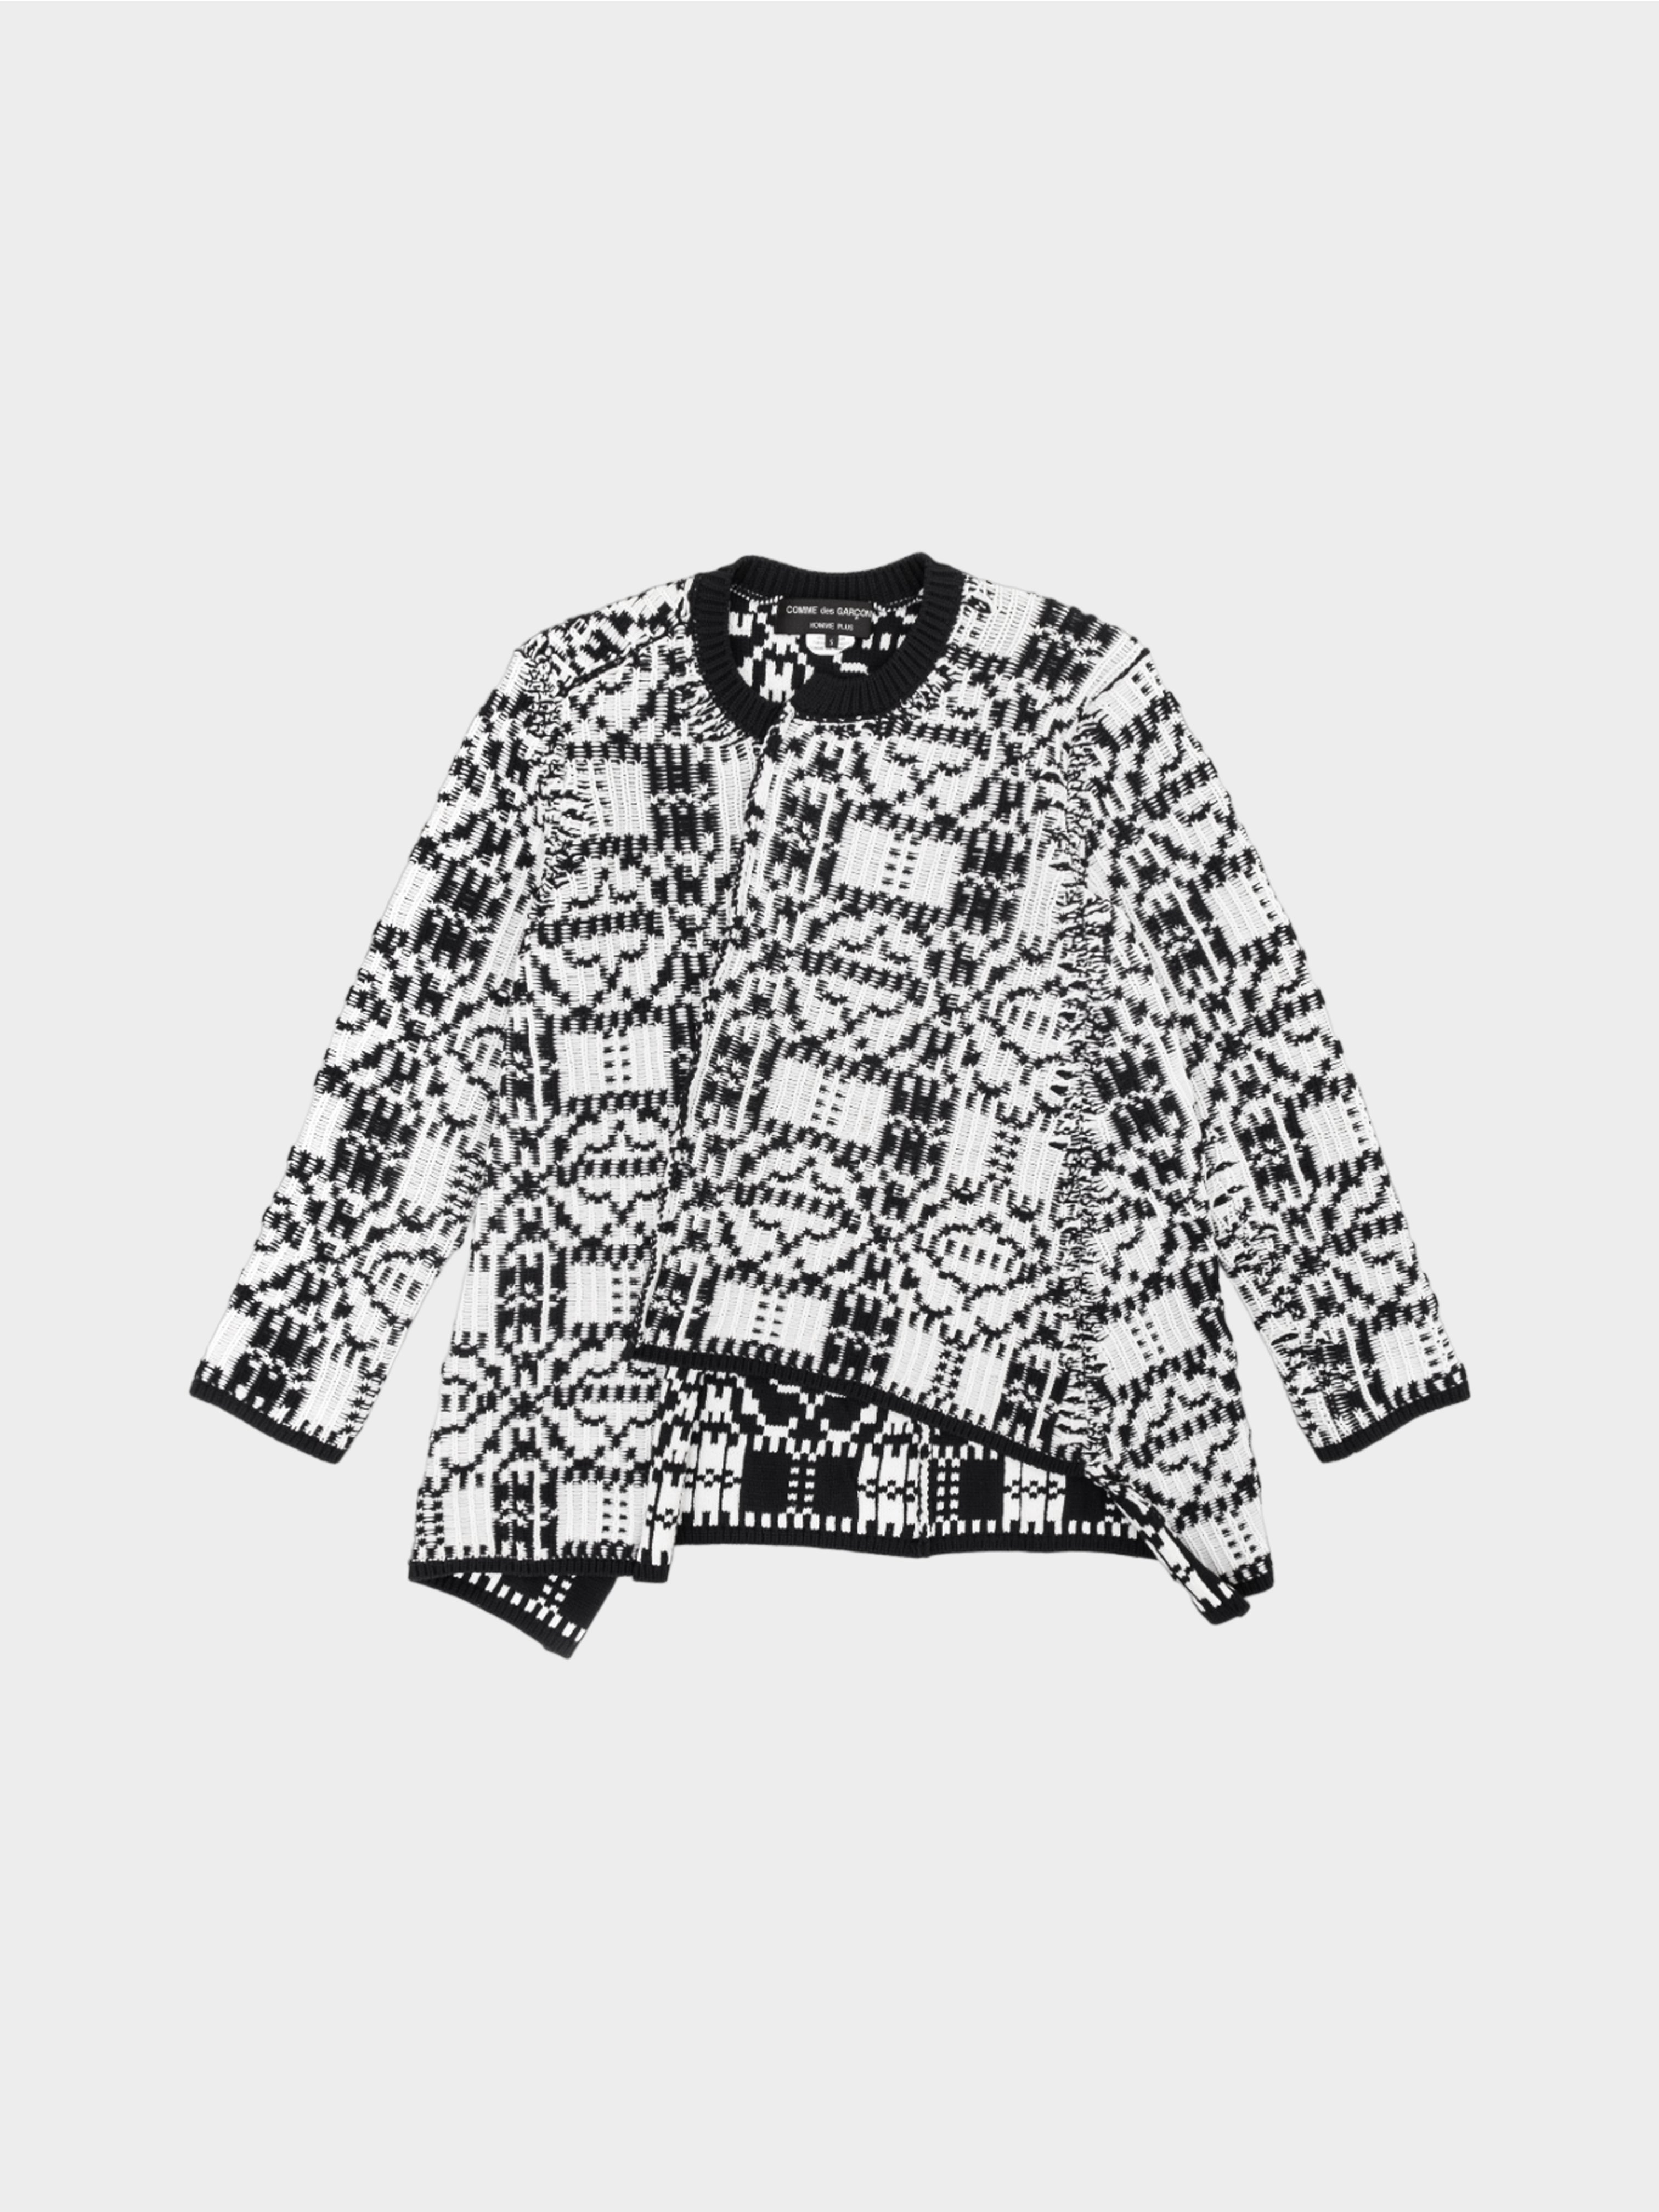 Comme des Garçons  FW 2021 Black and White Asymmetrical Sweater